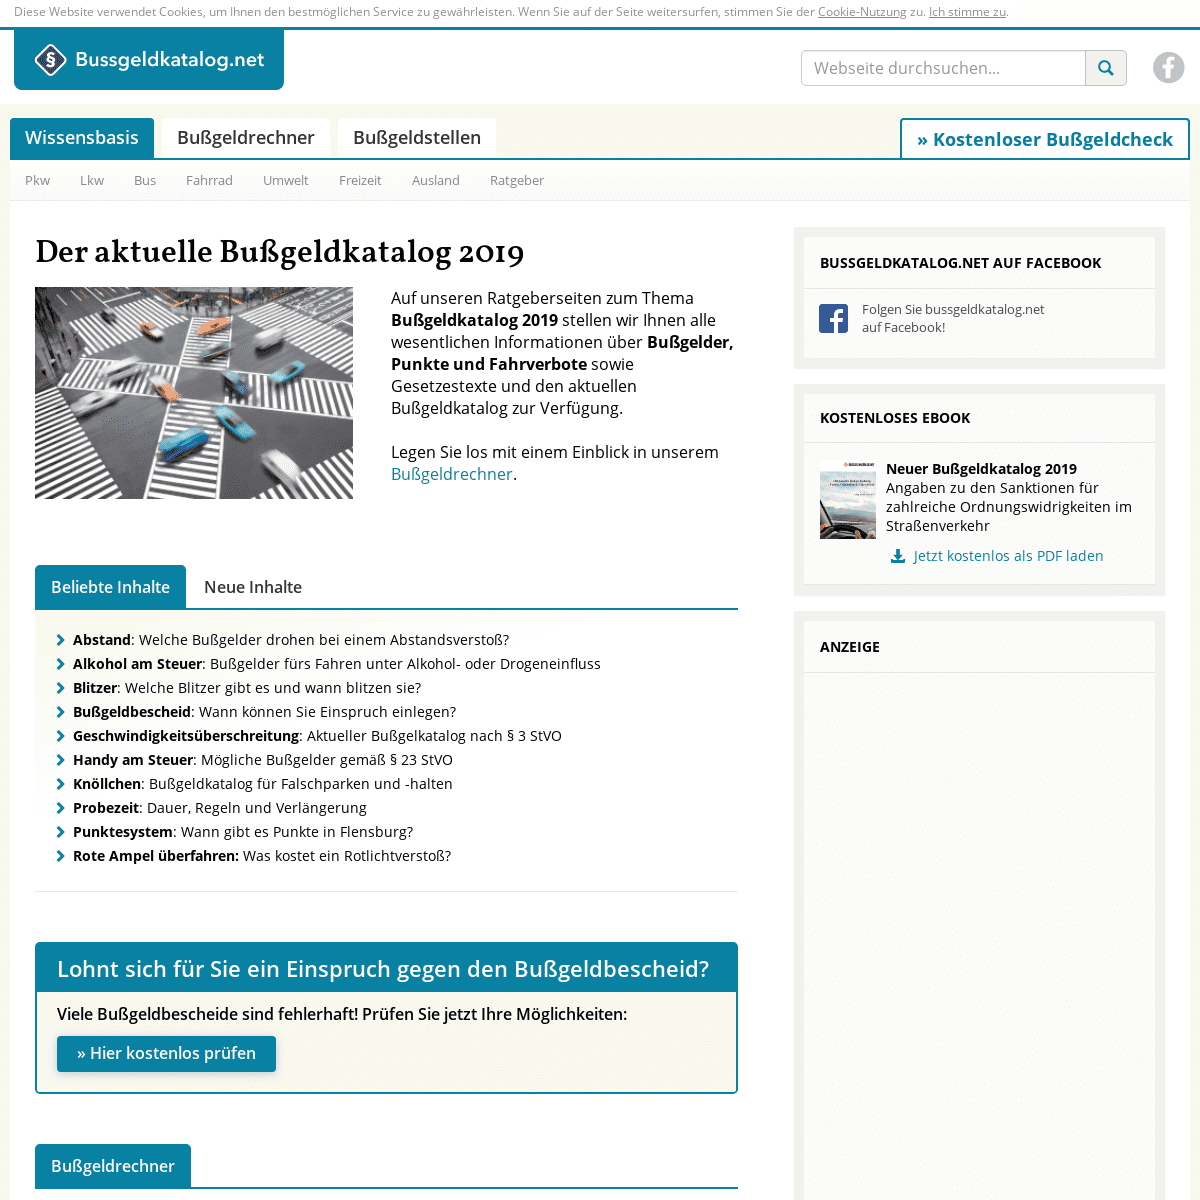 A complete backup of bussgeldkatalog.net